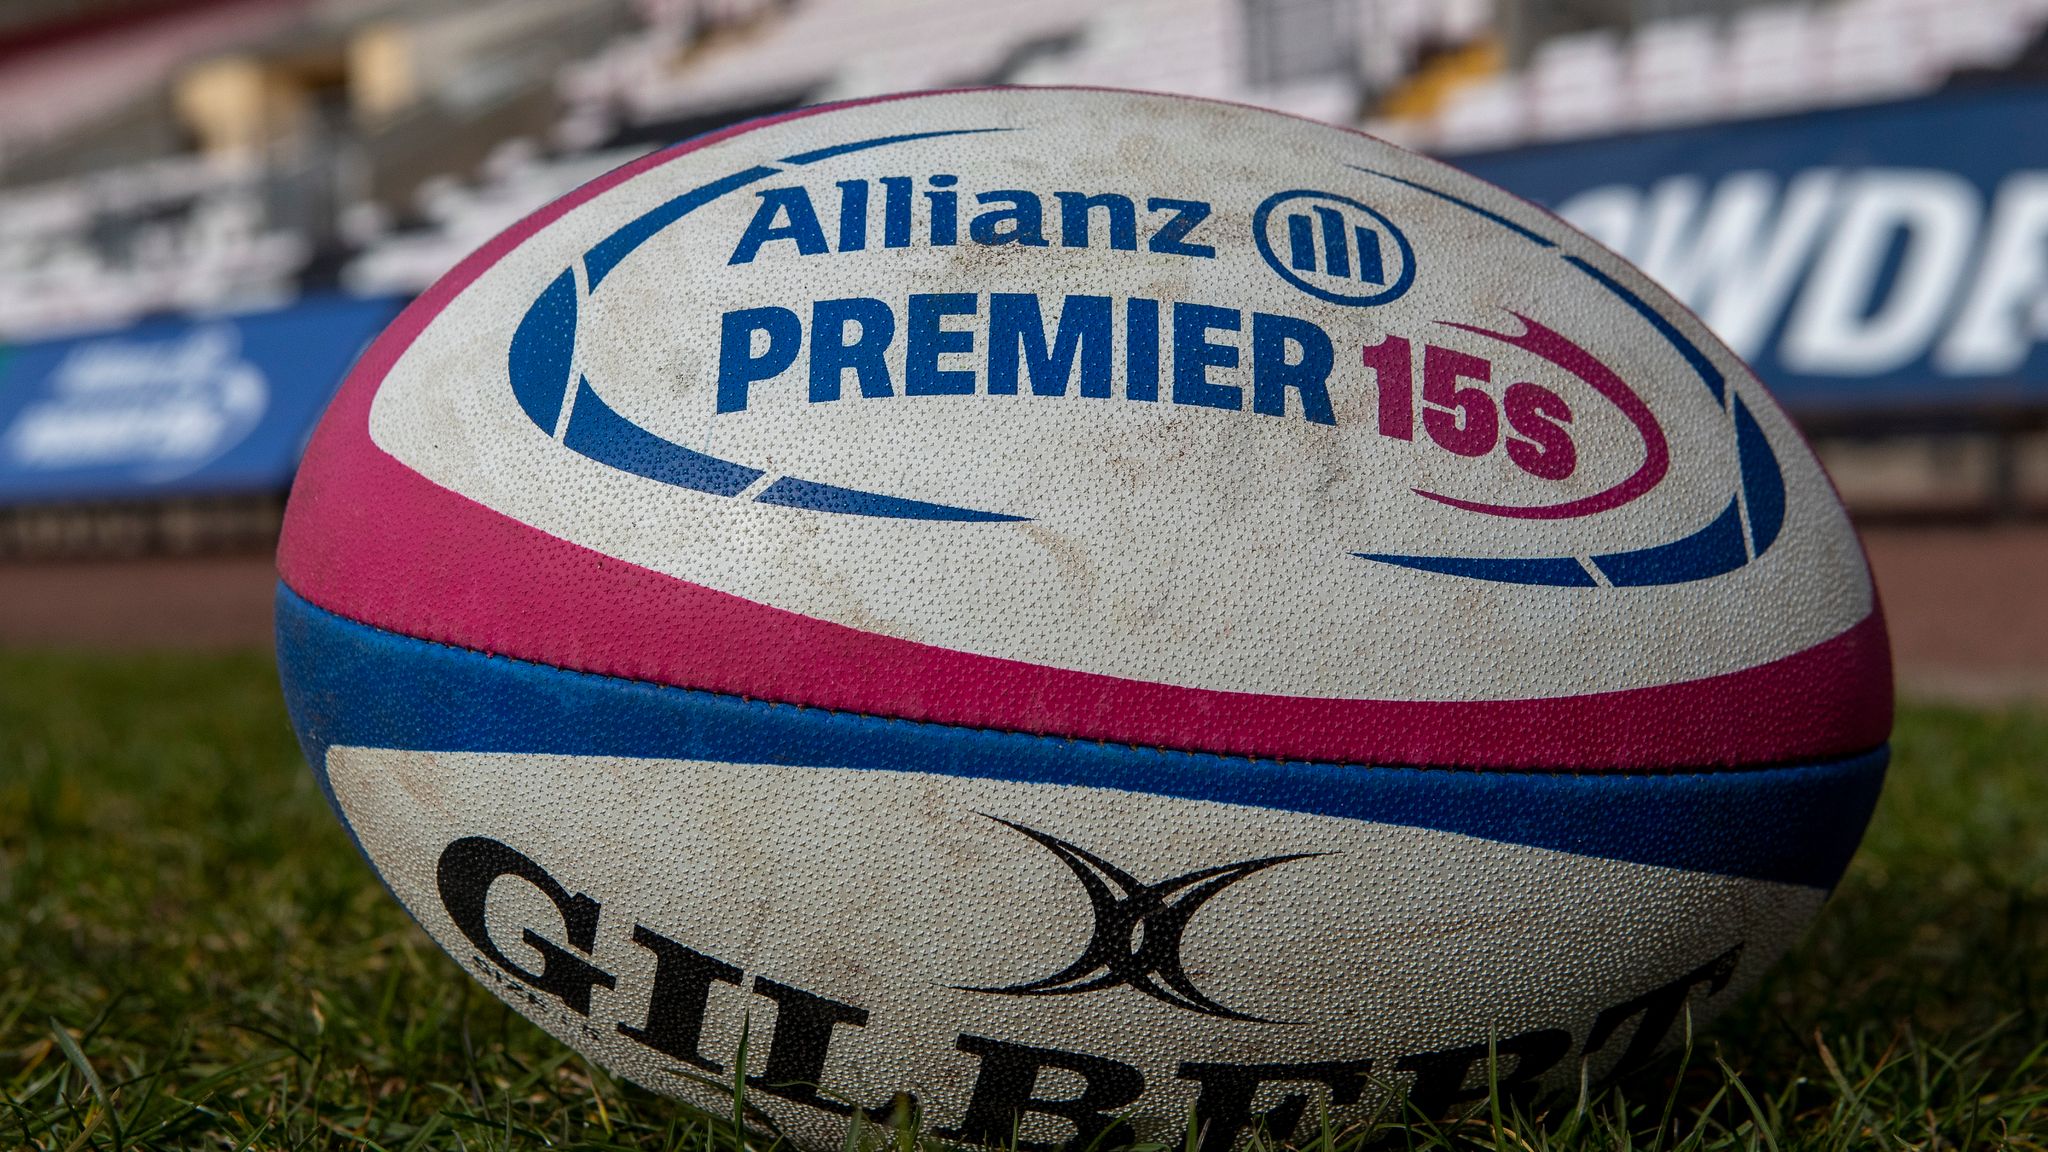 Allianz Permier 15s Rugby Ball